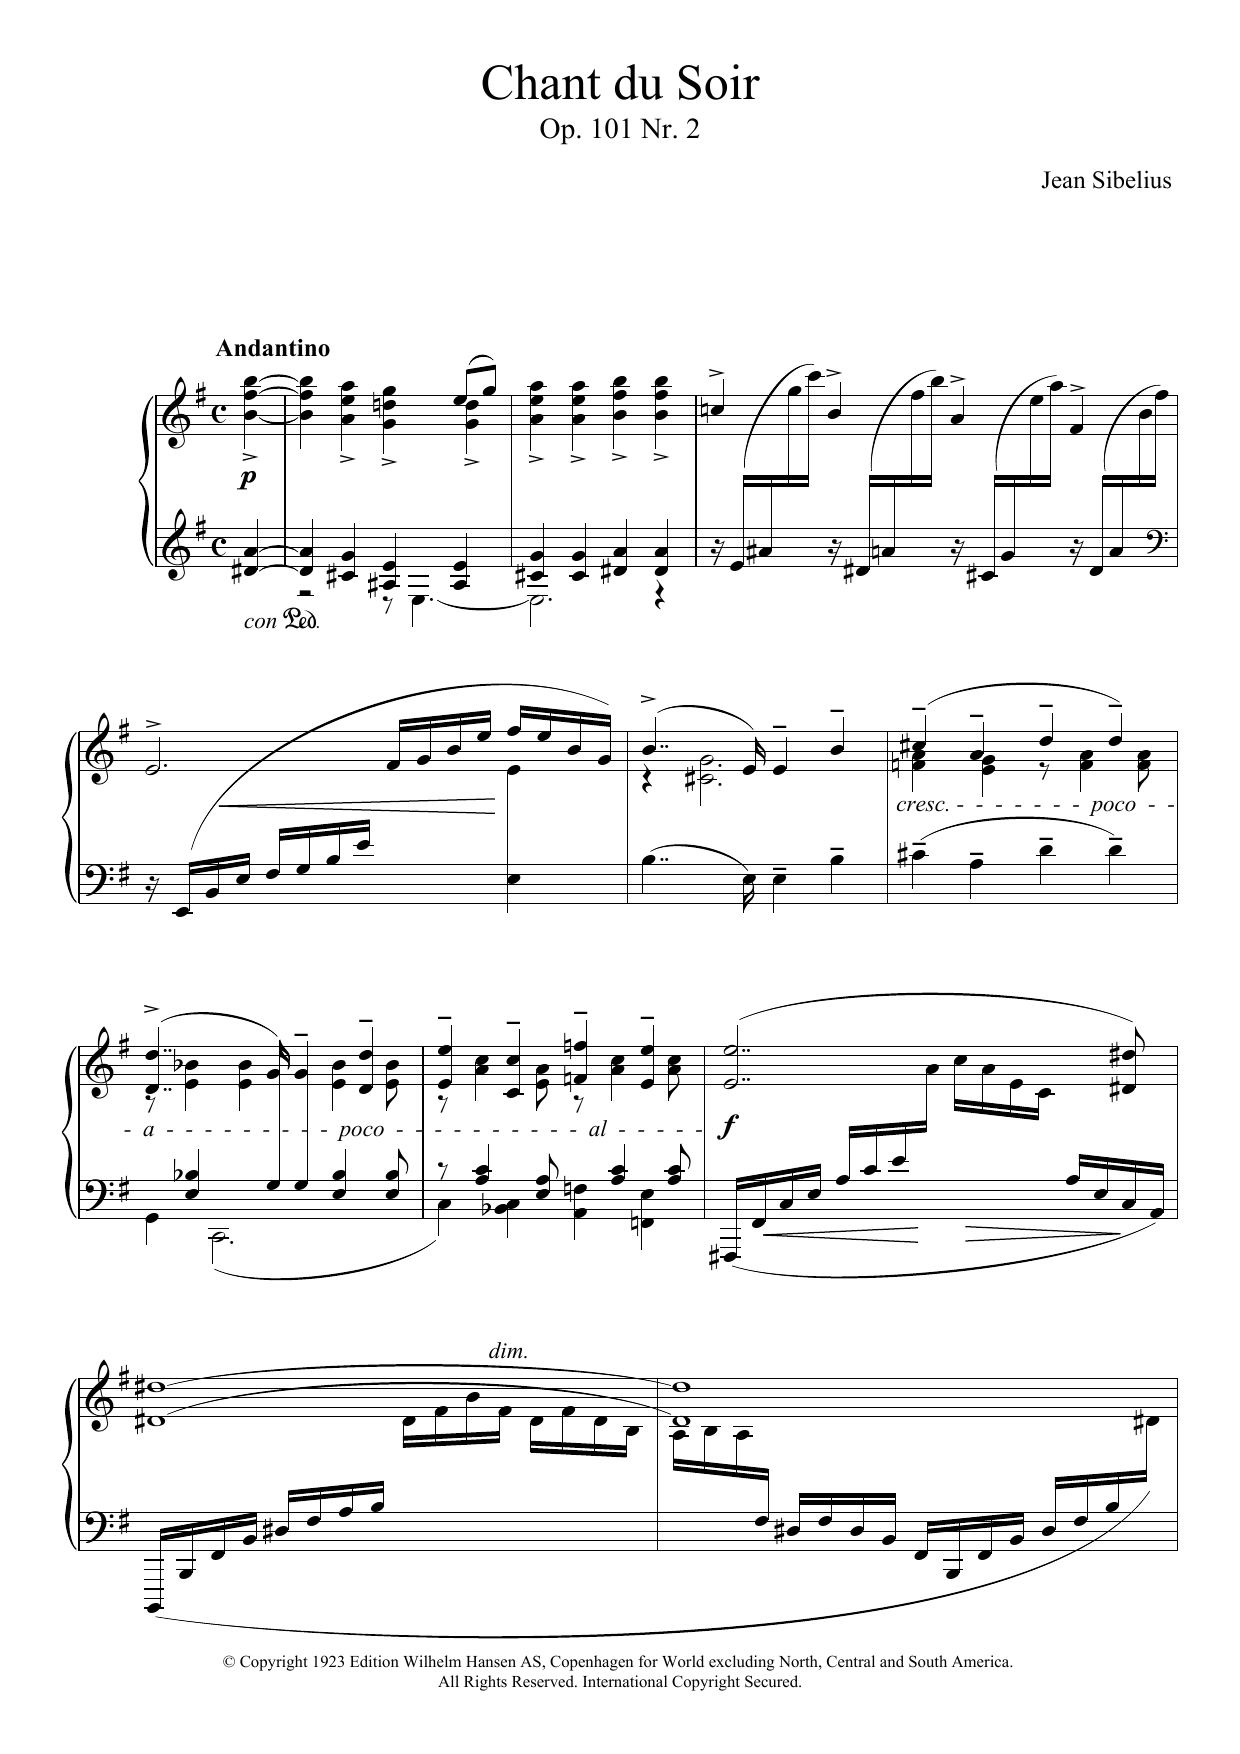 Jean Sibelius 5 Morceaux Romantiques, Op.101 - II. Chant Du Soir Sheet Music Notes & Chords for Piano - Download or Print PDF